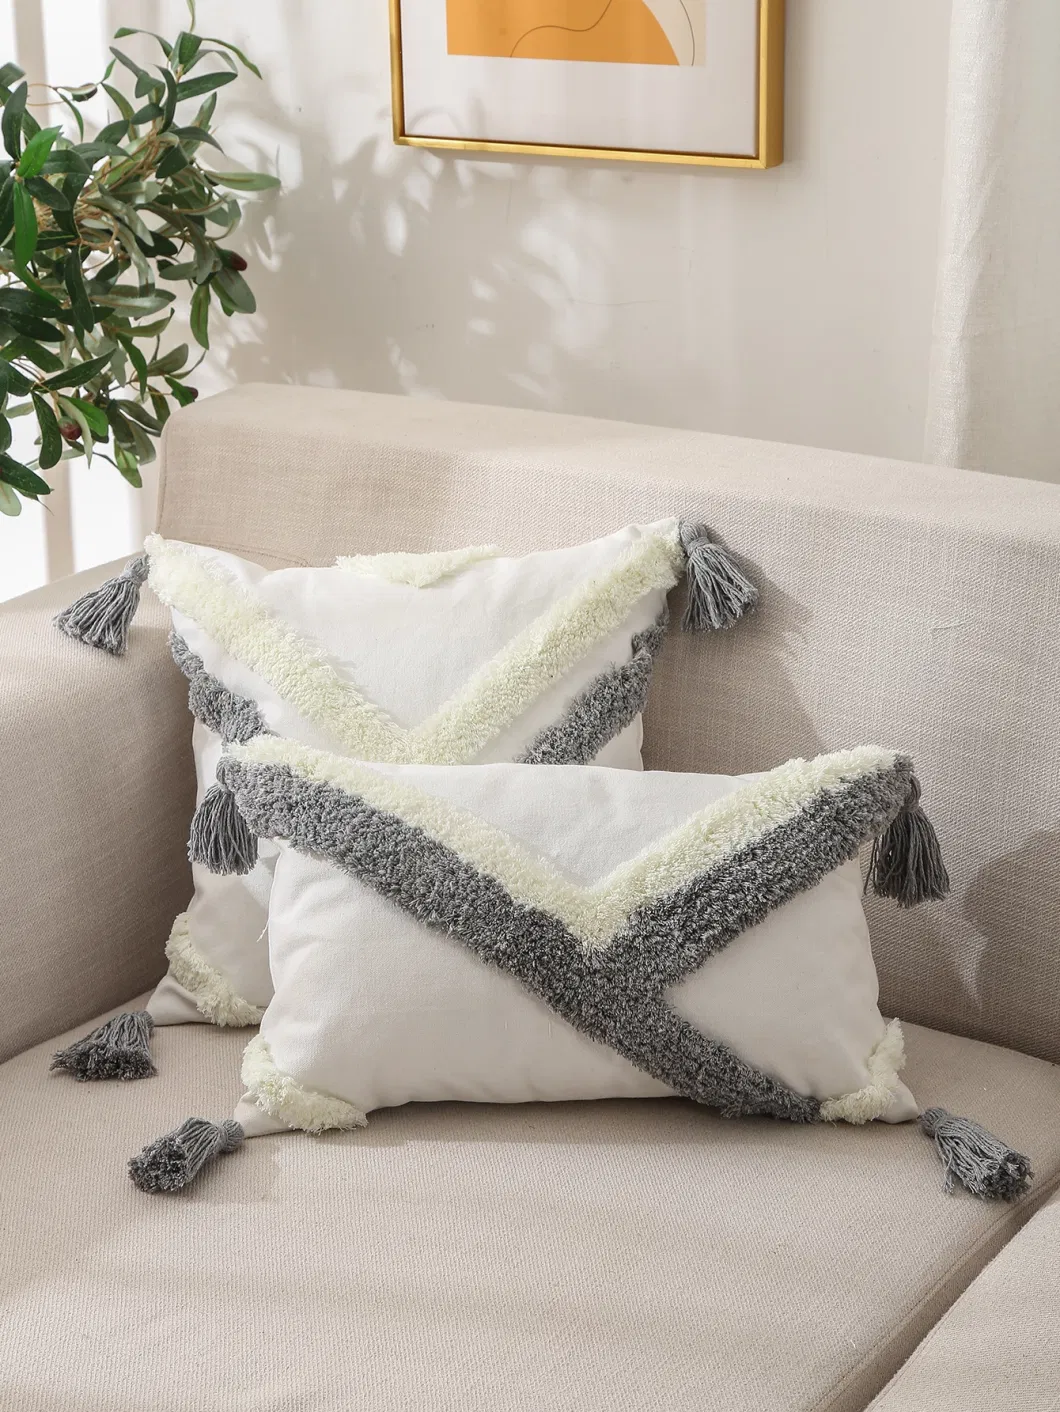 New Arrival Tufting Fashion Design Soft Cushion 100% Cotton Linen Fabric Chair Cushion Pillow Case Daily Use Cushion Cover